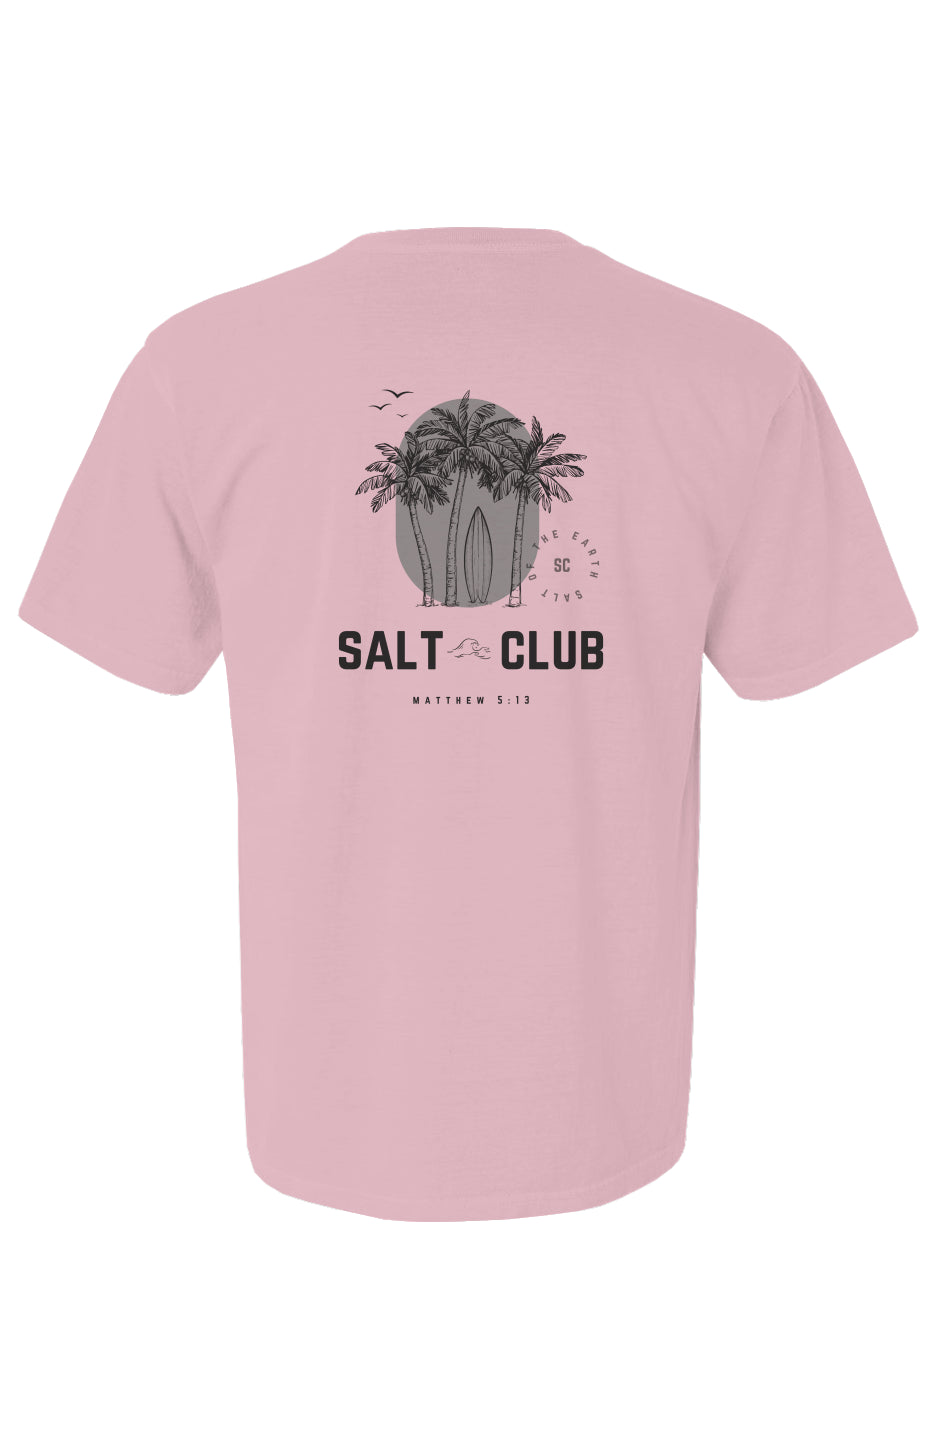 Salt Club pnk